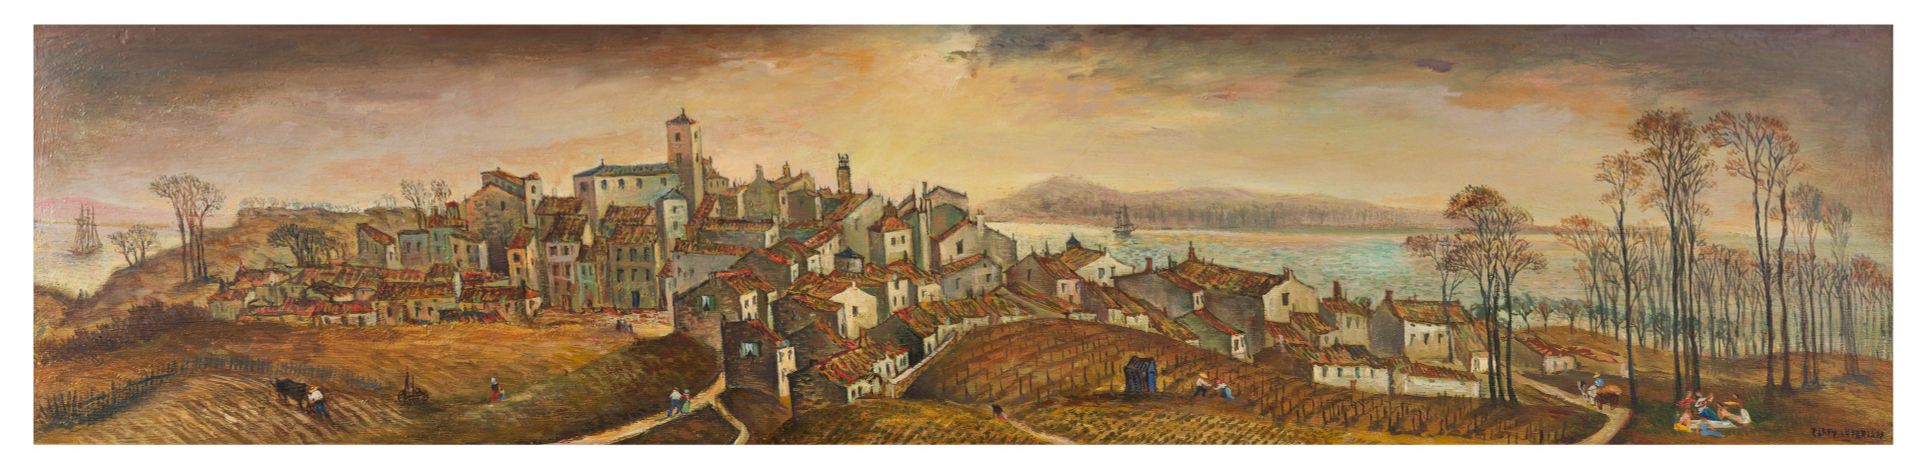 Null 让-拉菲-勒-佩尔桑 (1920 - 2008)

法国南部一个村庄的全景图

板面油画，右下角有签名

28 x 120 cm